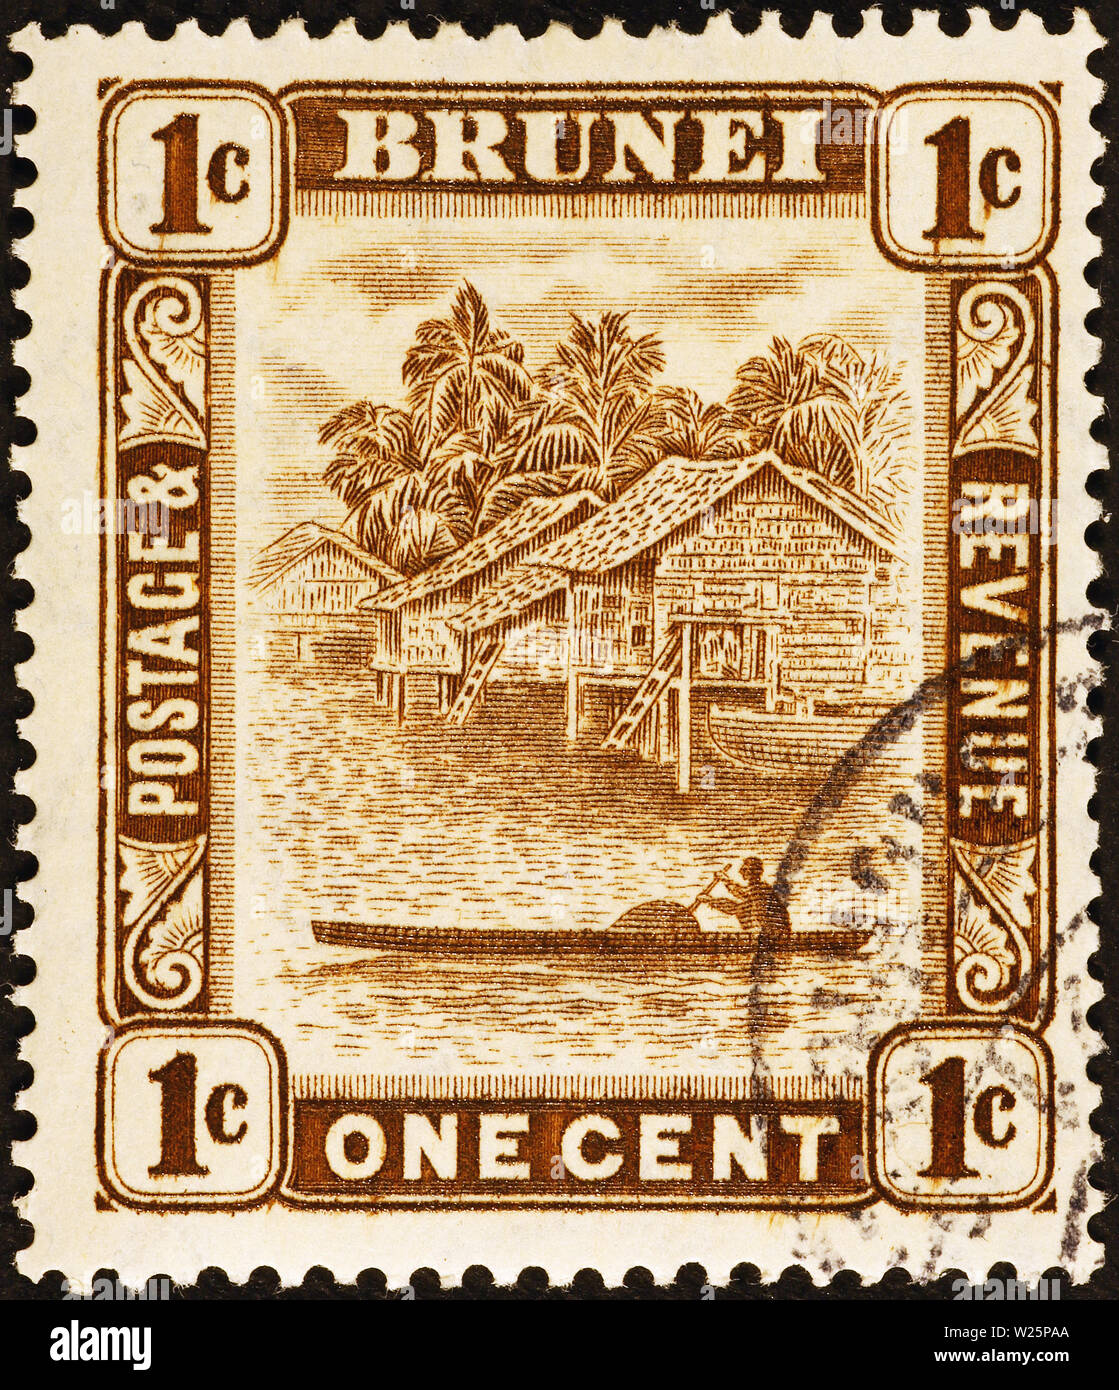 Pirague on vintage postage stamp of Brunei Stock Photo